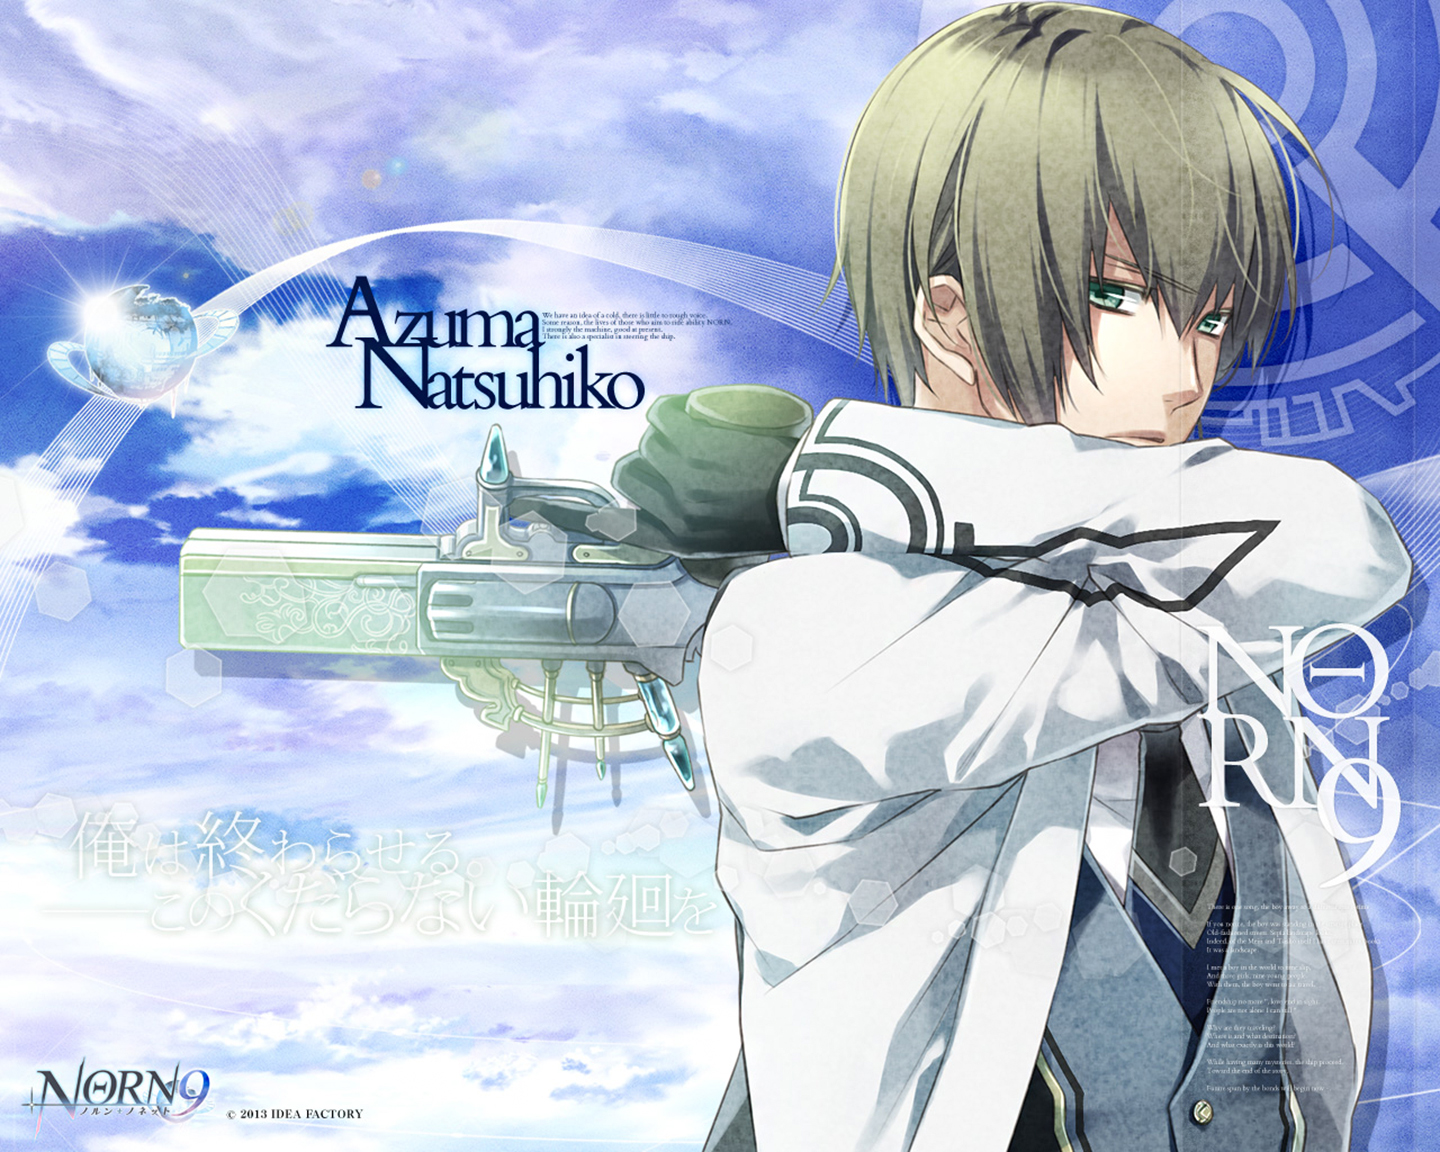 anime, norn9: norn + nonette, natsuhiko azuma